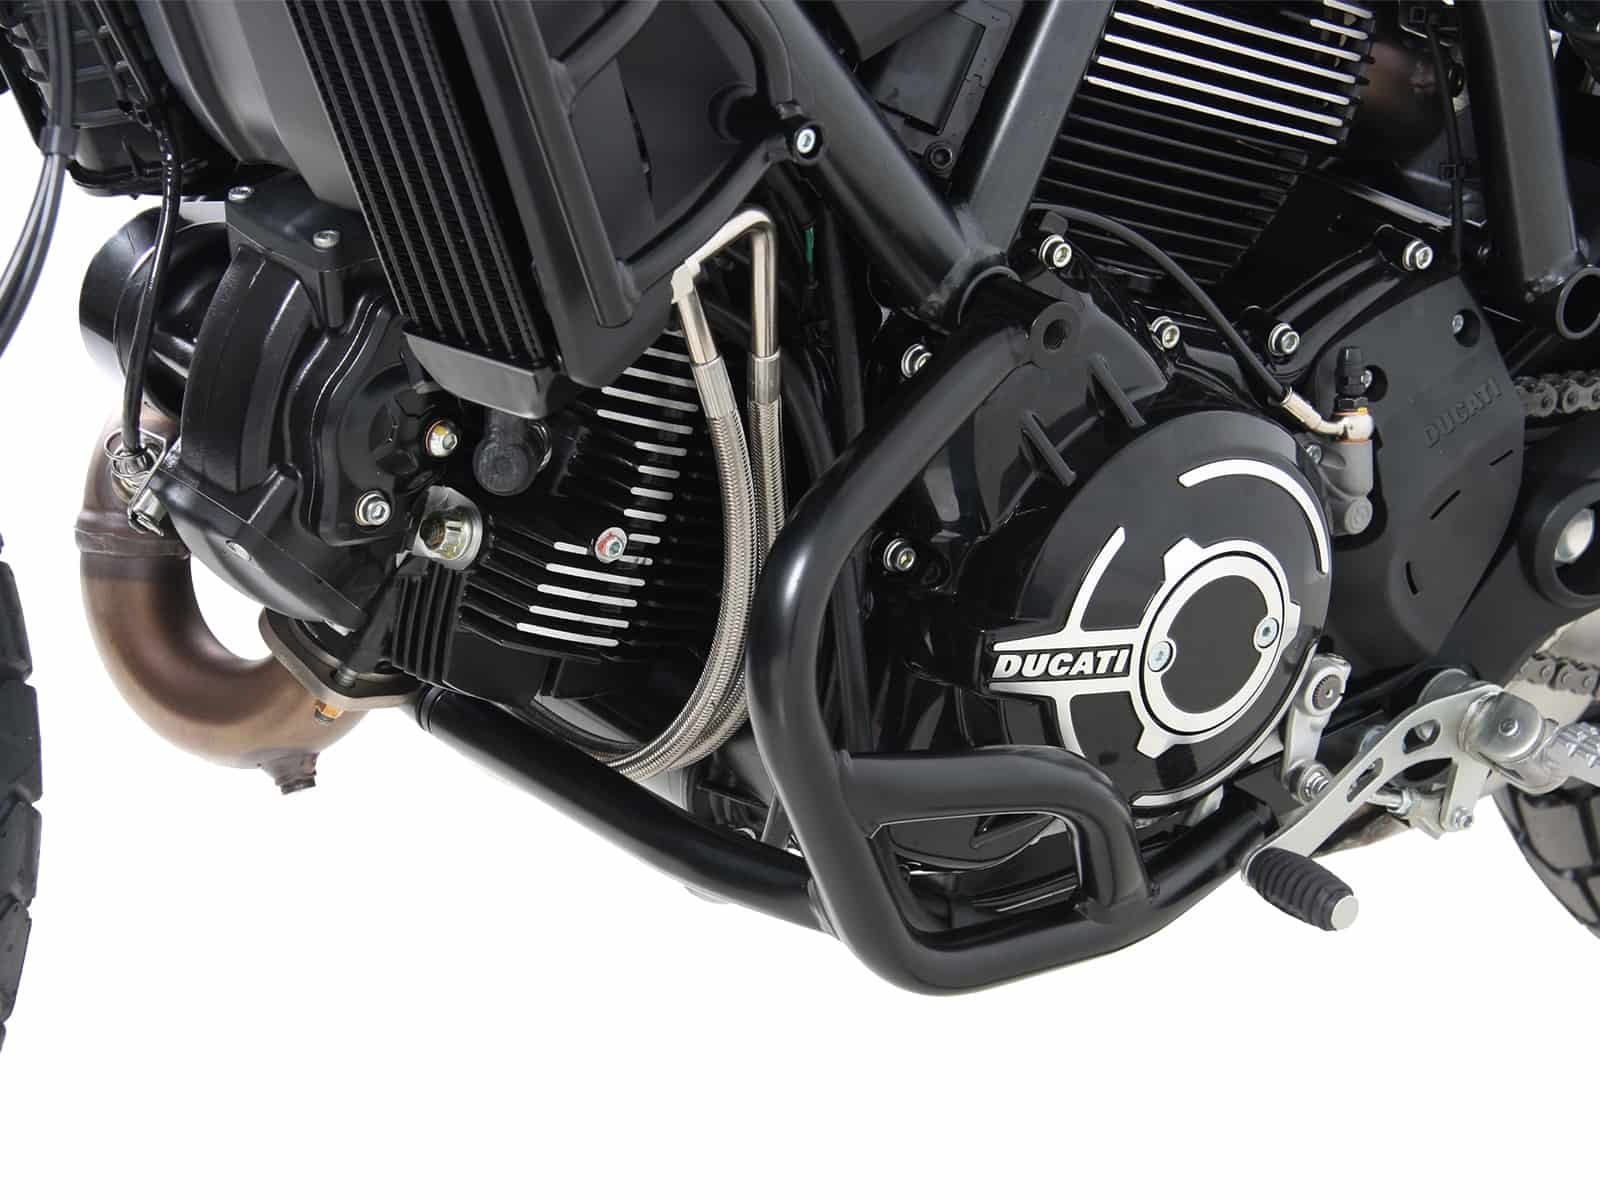 Motorschutzbügel schwarz für Ducati Scrambler 800 (2019-) - Bild 1